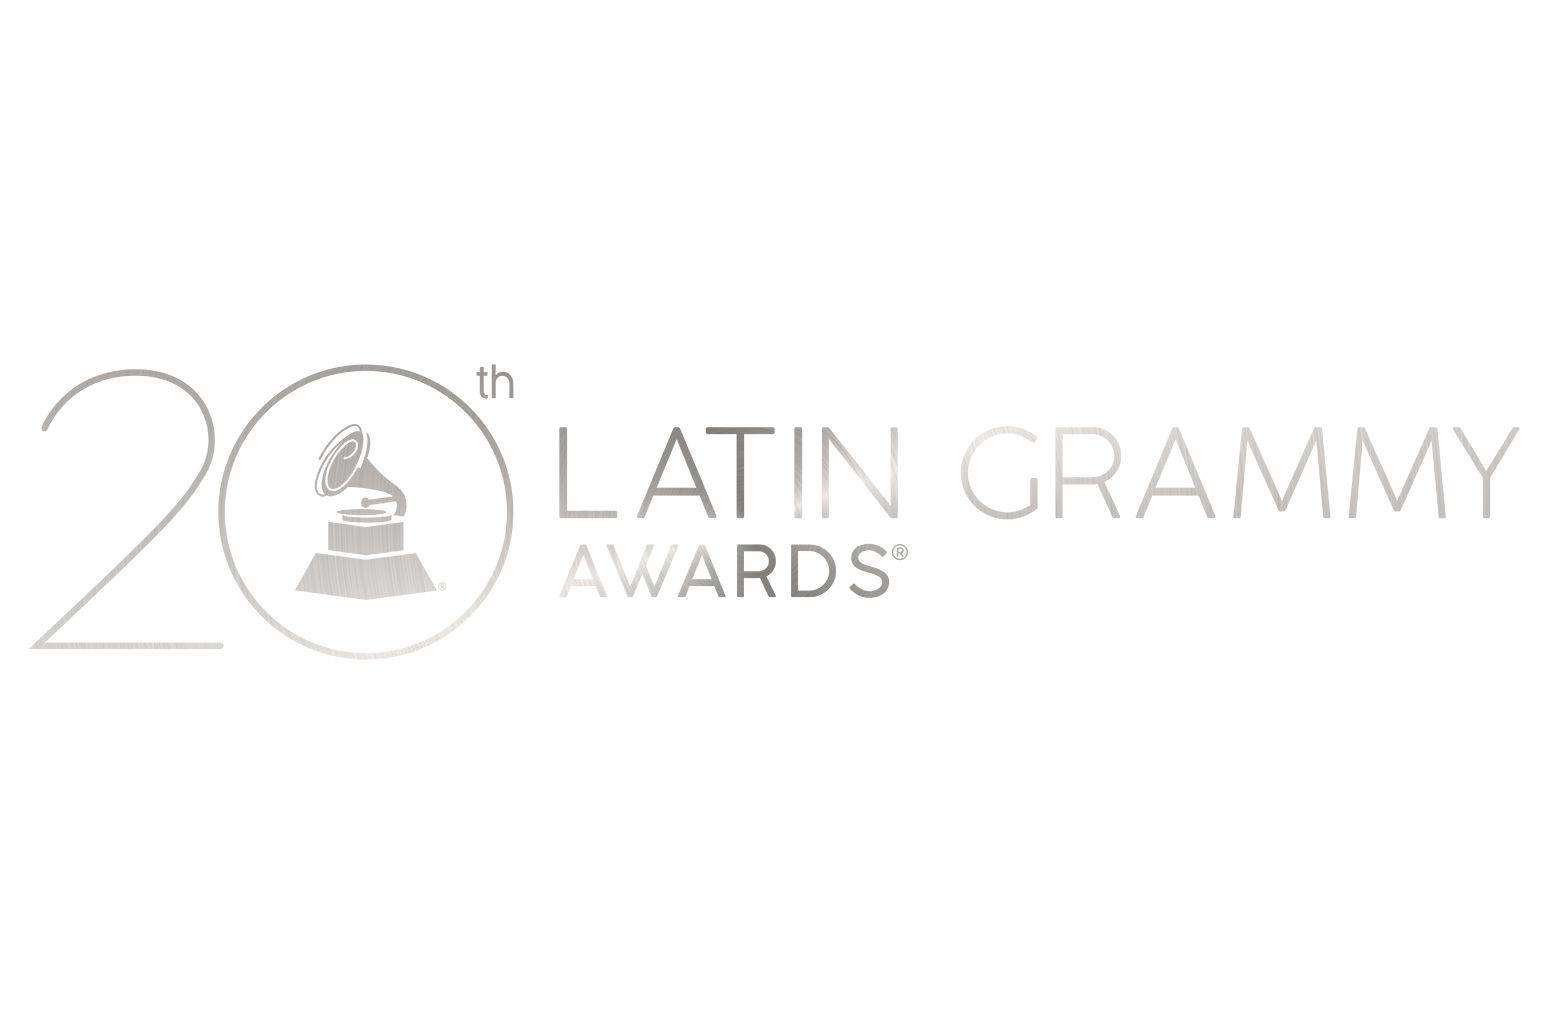 Grammys Logo - Latin Grammys 2019: The Latin Recording Academy Reveals New Awards